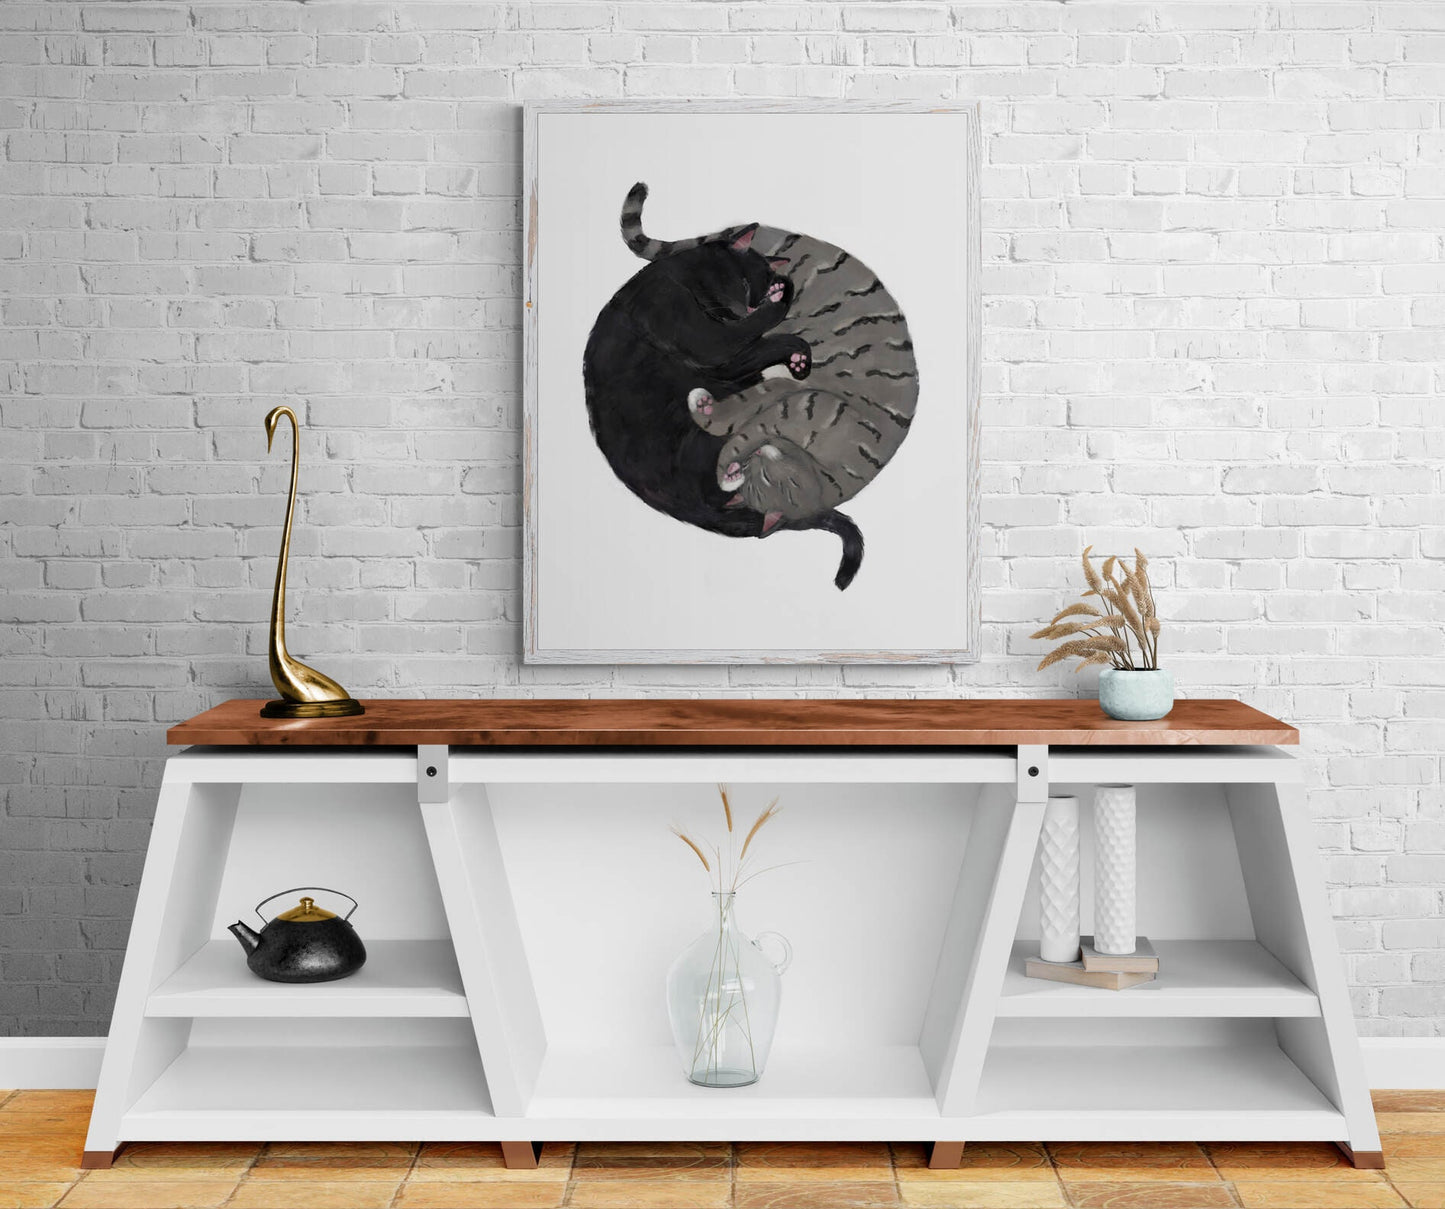 Customized Sleeping Black And  Gray Tabby Cat Print, Custom Cuddling Gray and Black Cat, Cat Illustration, Home Decor, Lazy Cat Painting